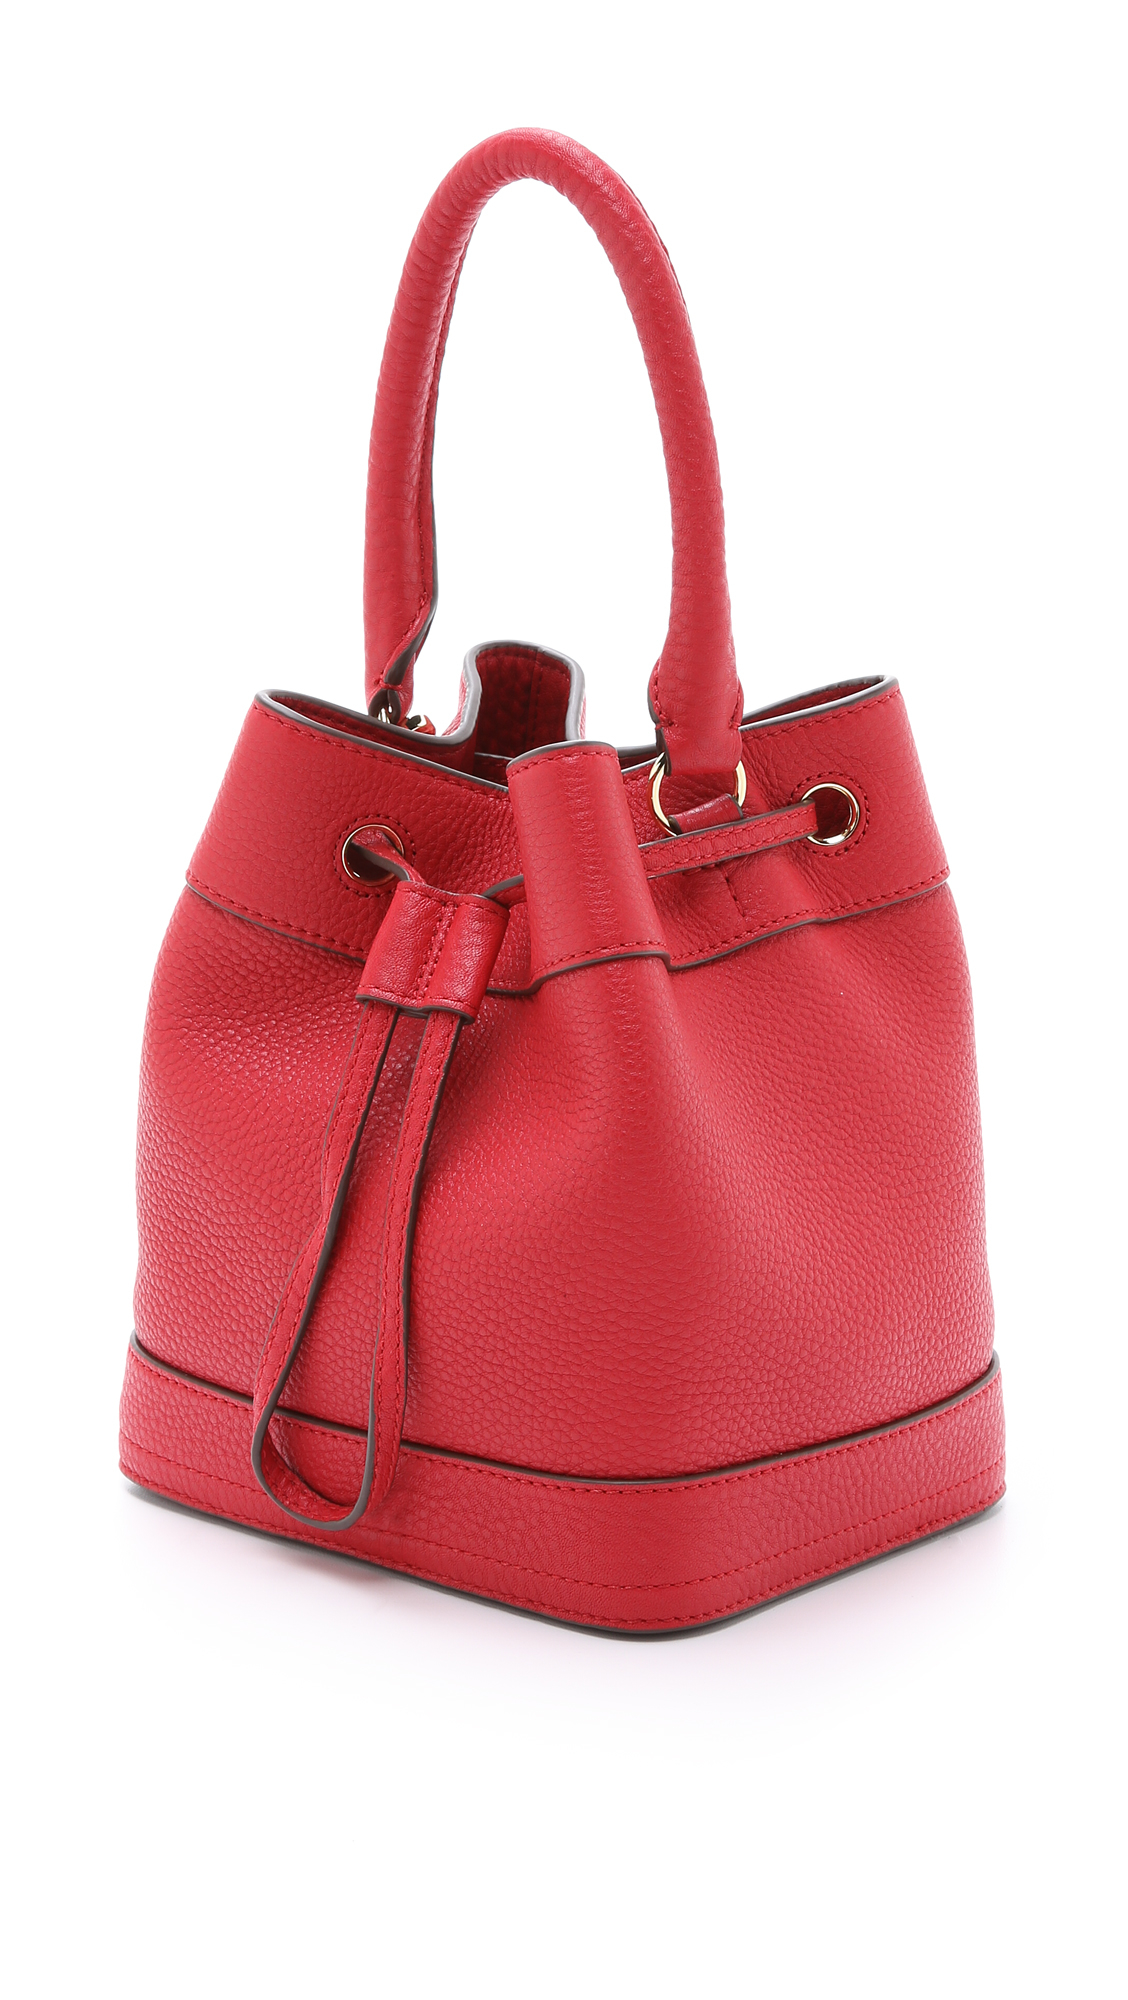 Lyst - Tory Burch Robinson Mini Bucket Bag in Red